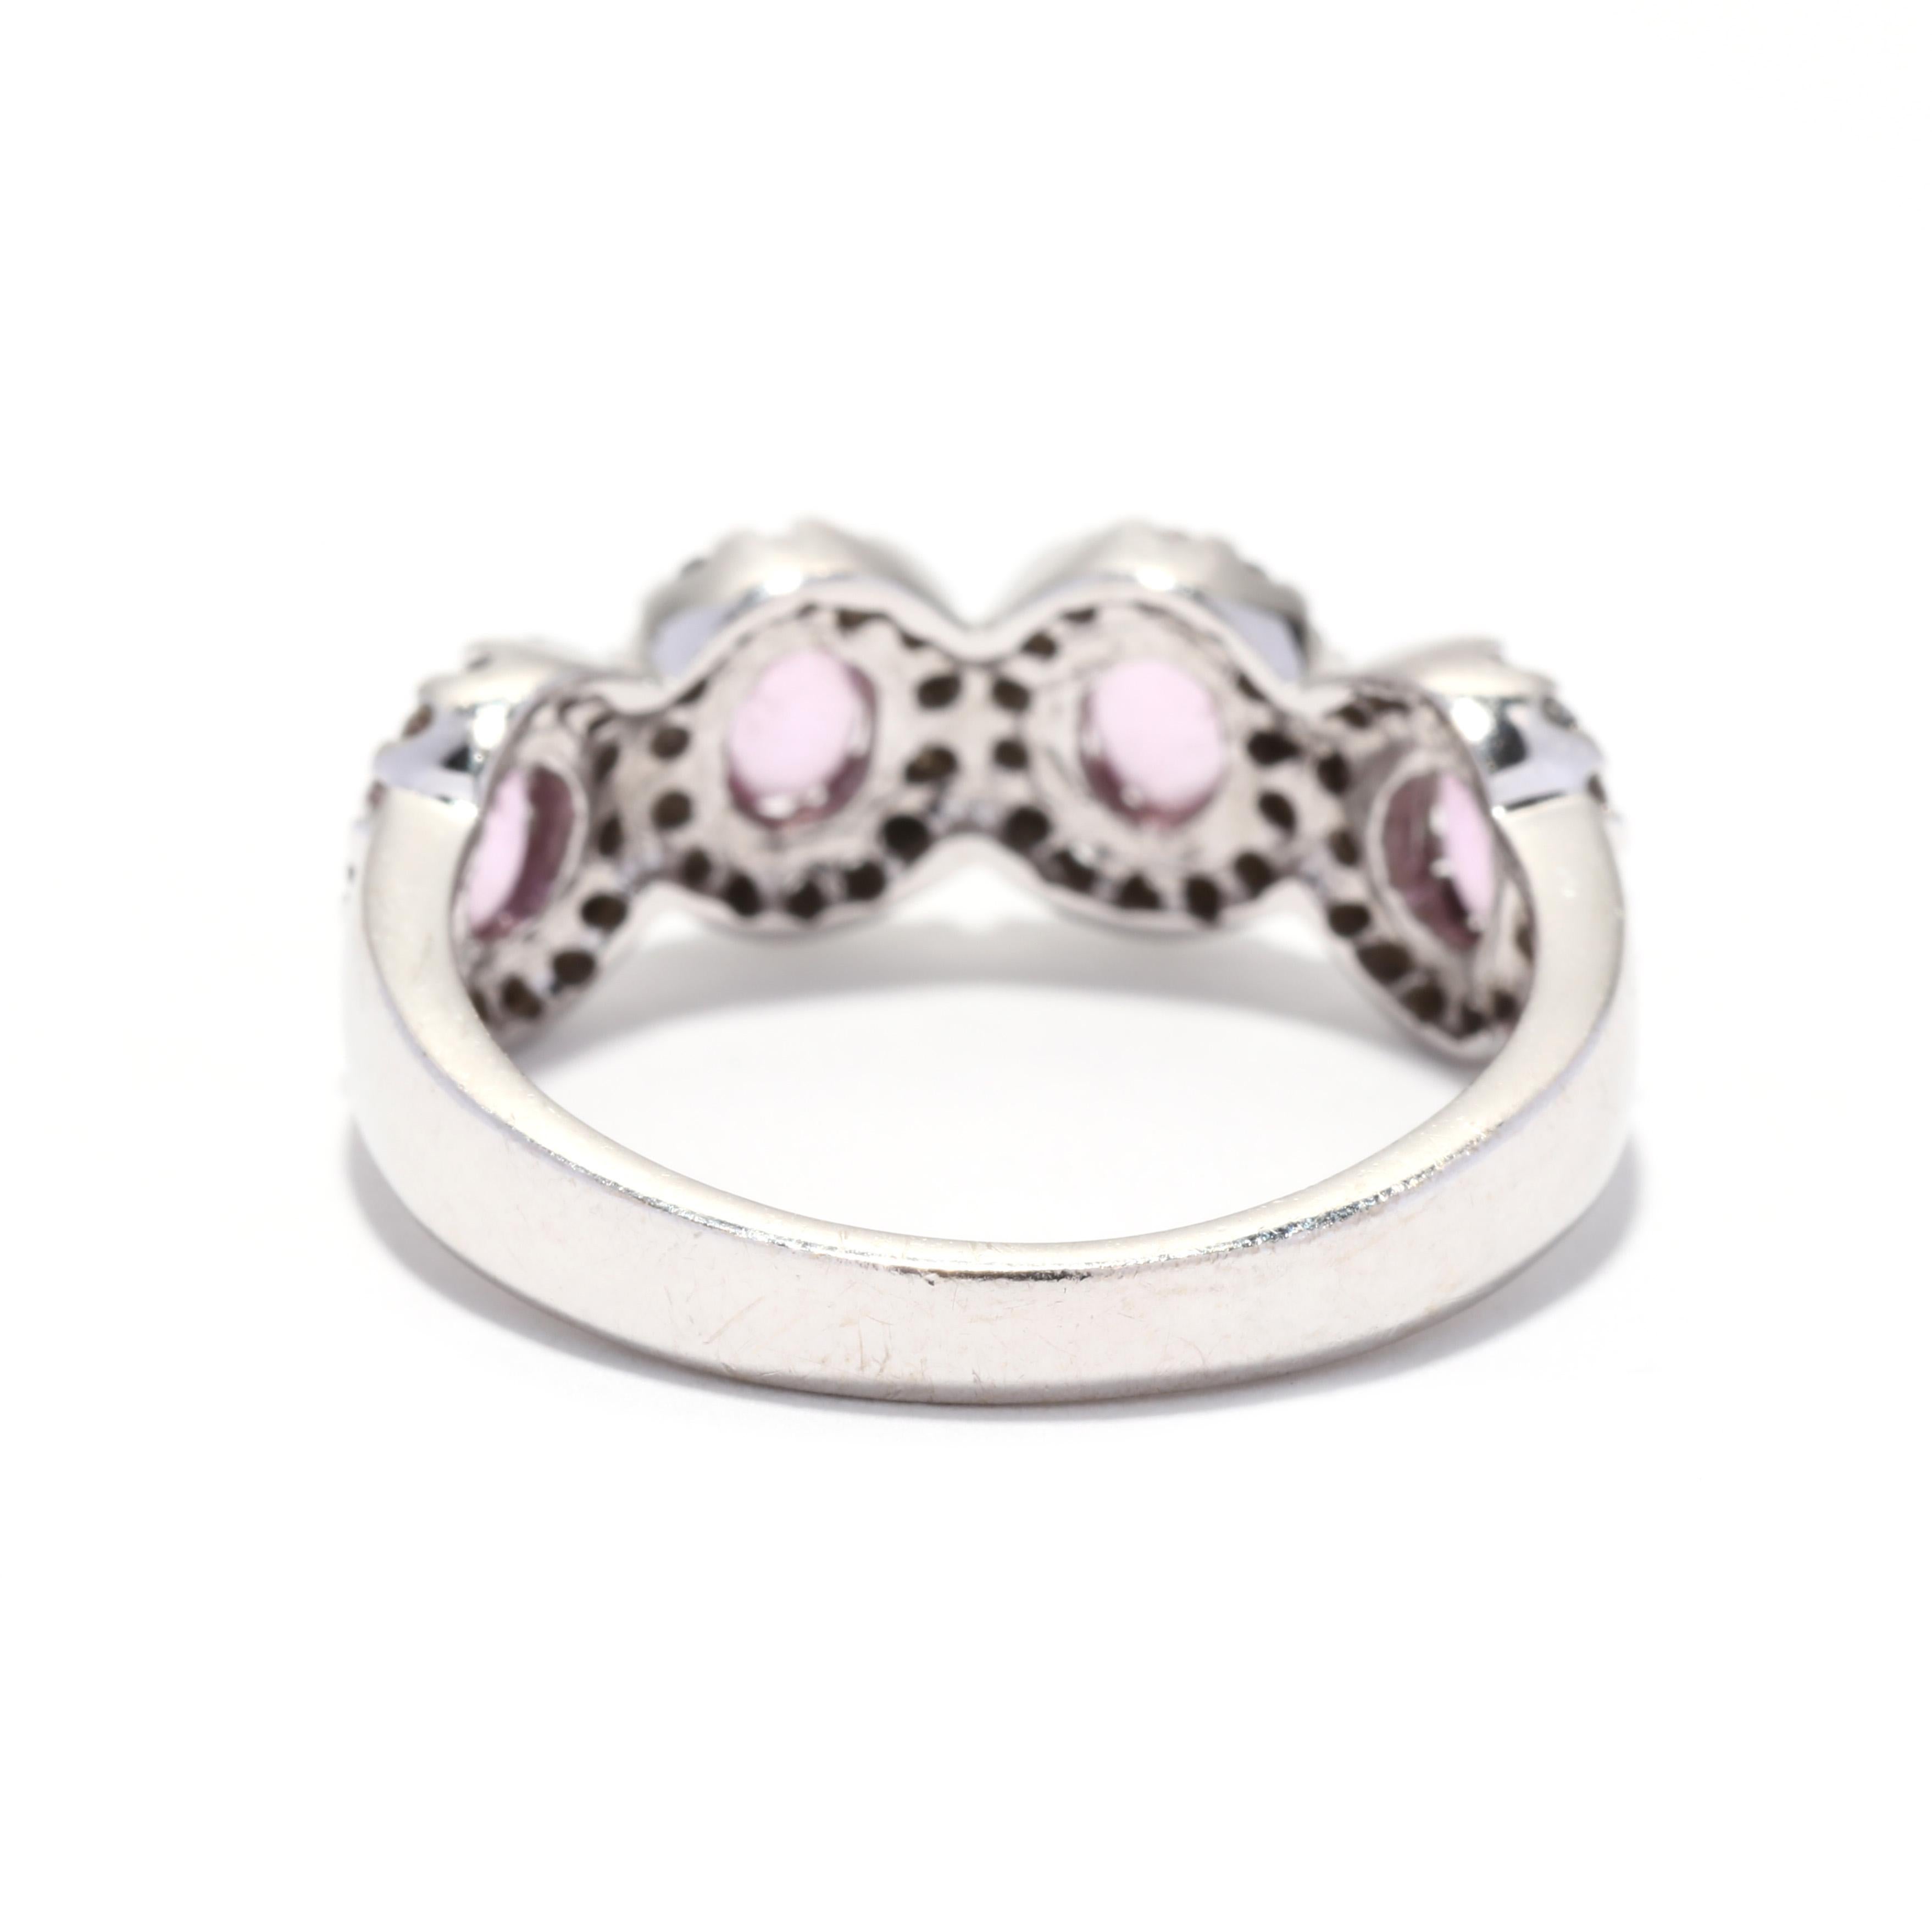 4 stone sapphire ring